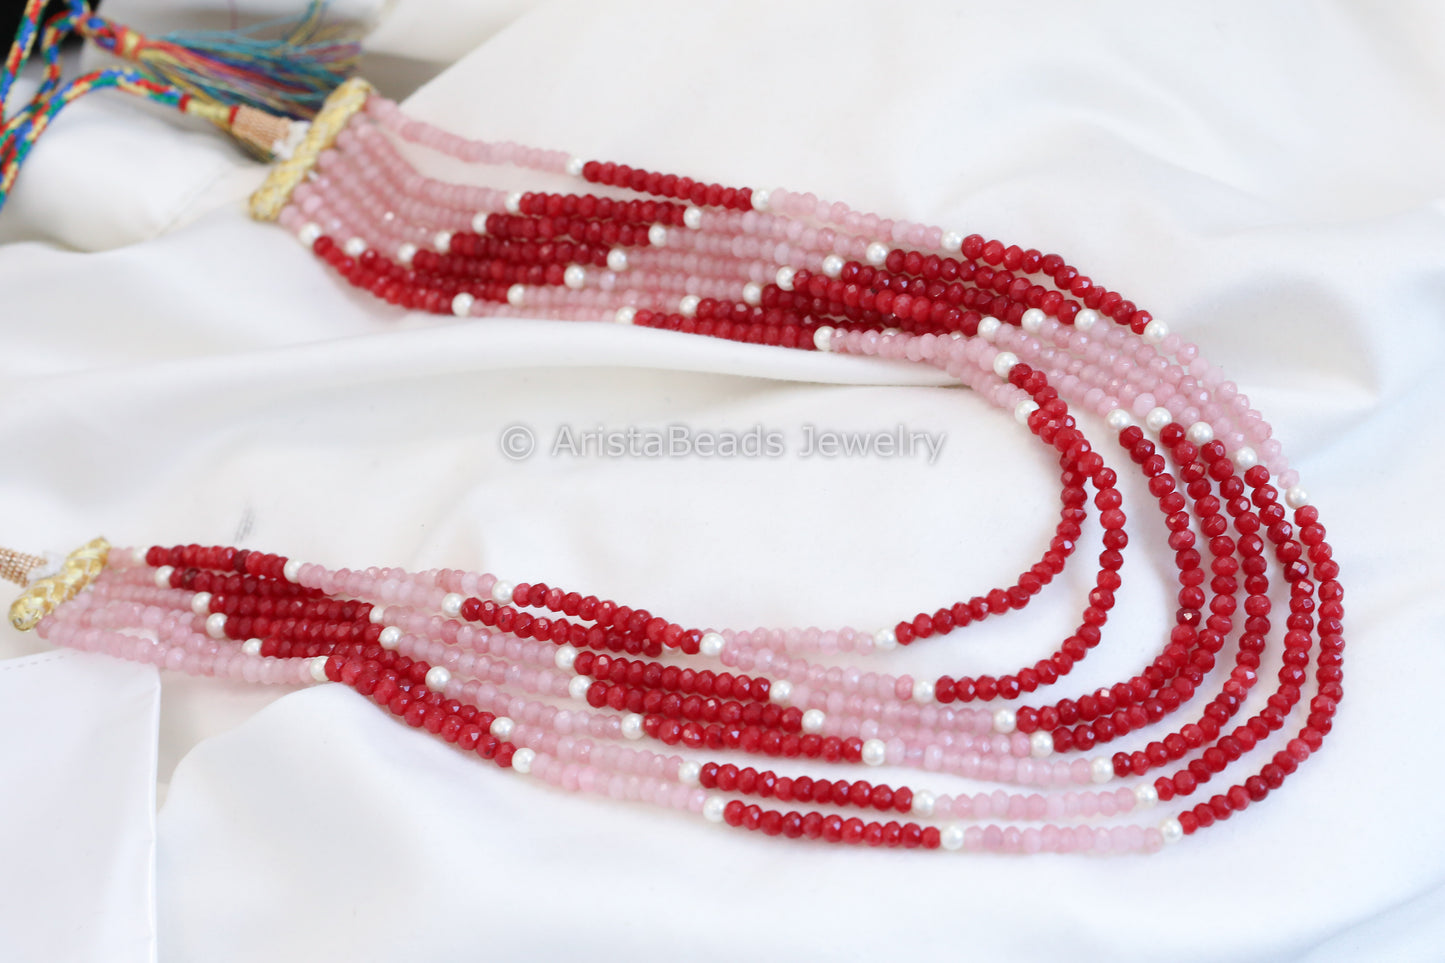 7 Strand Semiprecious Beads Necklace - Style 8